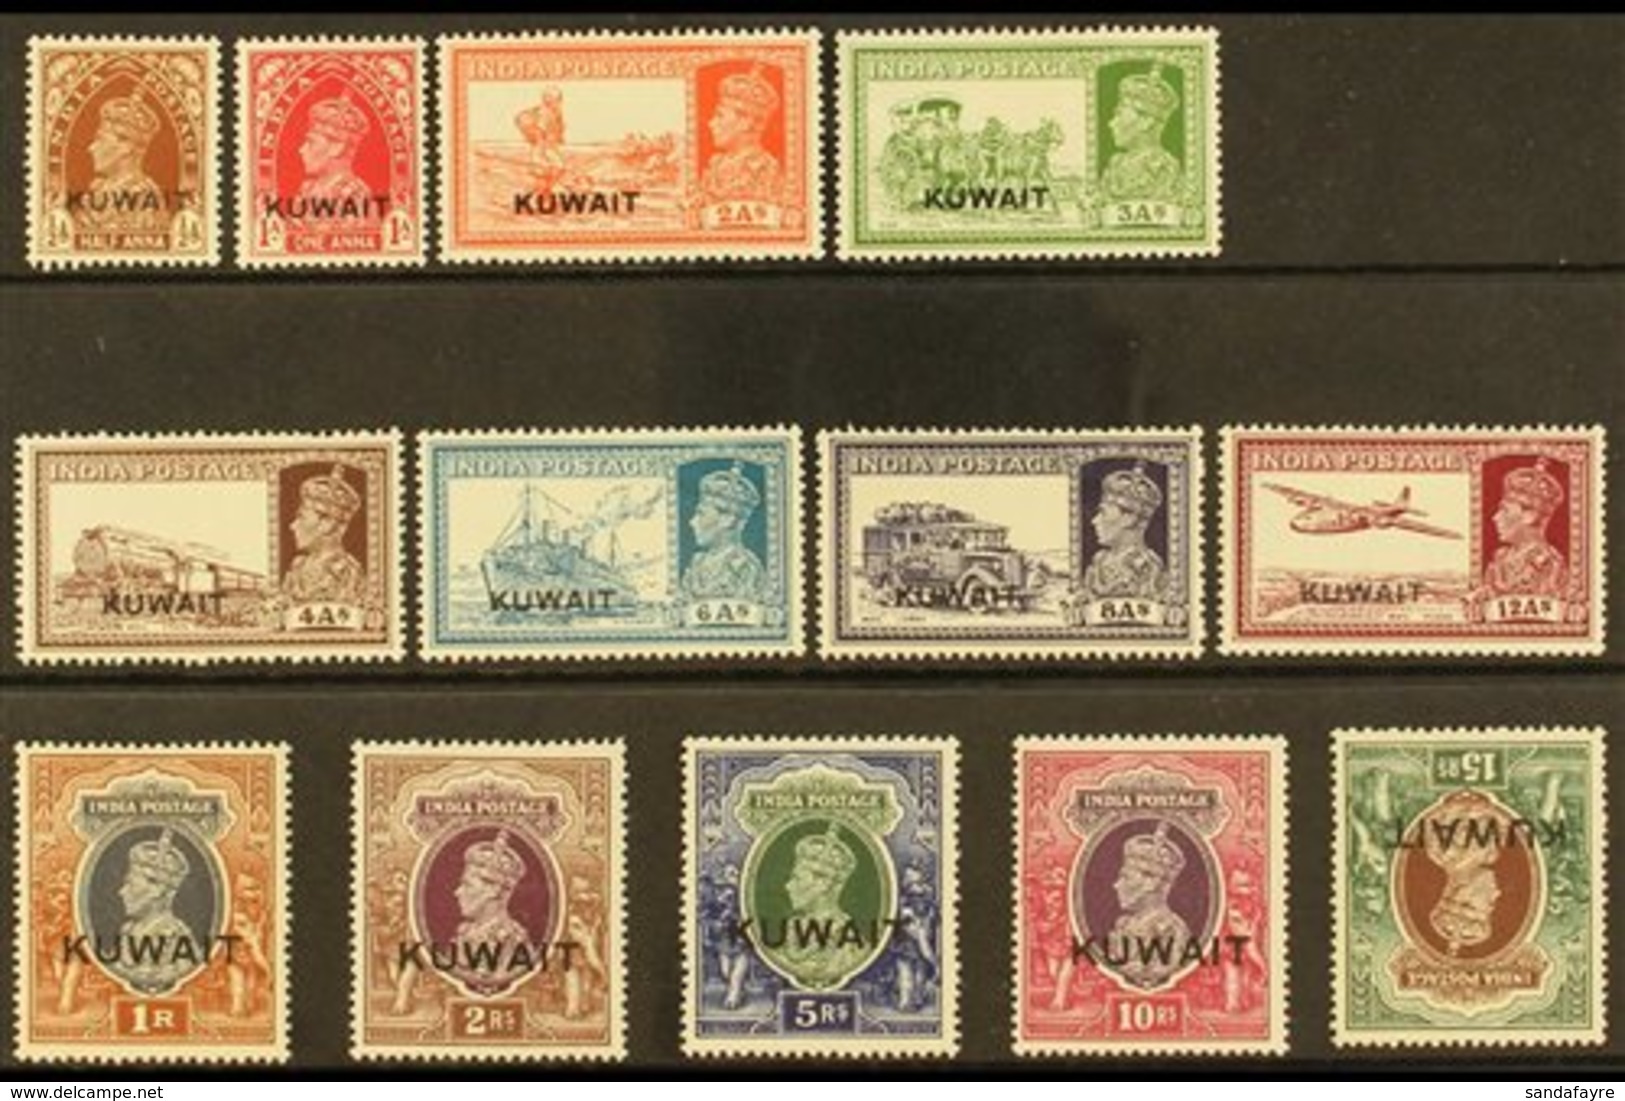 1939 KGVI Opt'd "Kuwait" Definitive Set, SG 36/51w, Fine Mint, 15r With Inverted Watermark & Light Gum Bend (13 Stamps)  - Kuwait